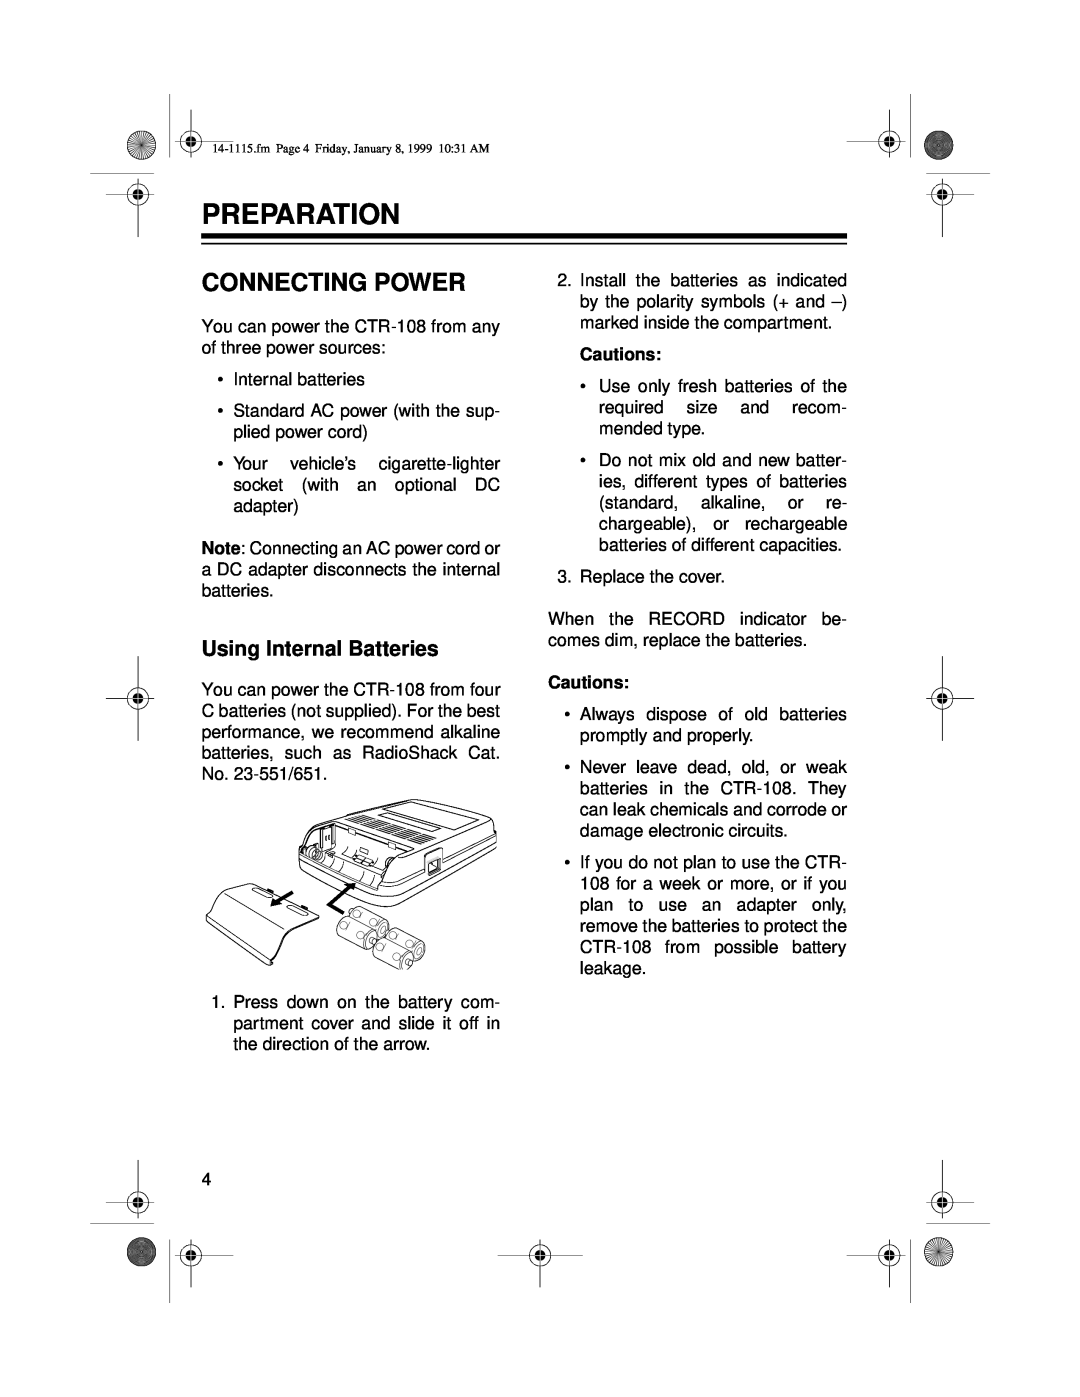 Optimus CTR-108 owner manual Preparation, Connecting Power, Using Internal Batteries 